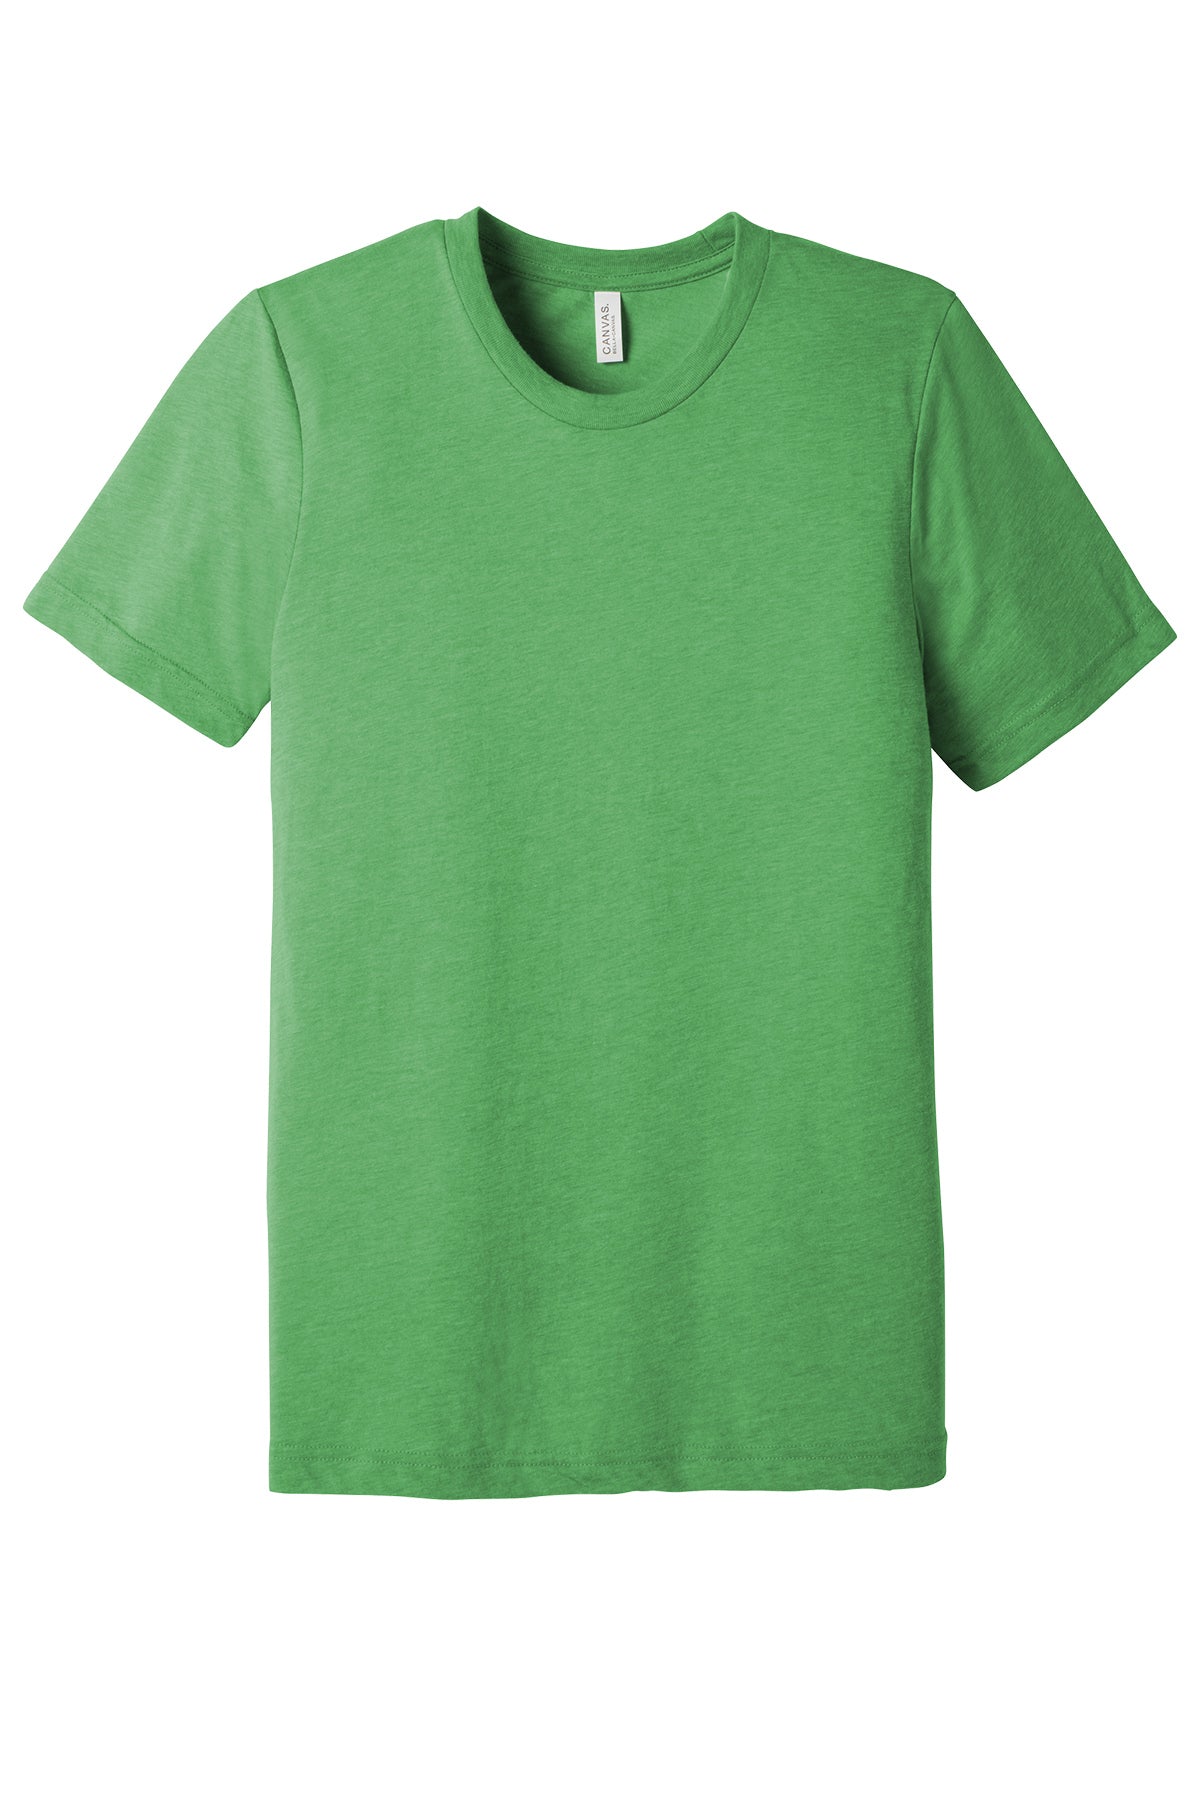 Bella+Canvas Bc3413 Adult T-Shirt Ad Small / Green Triblend